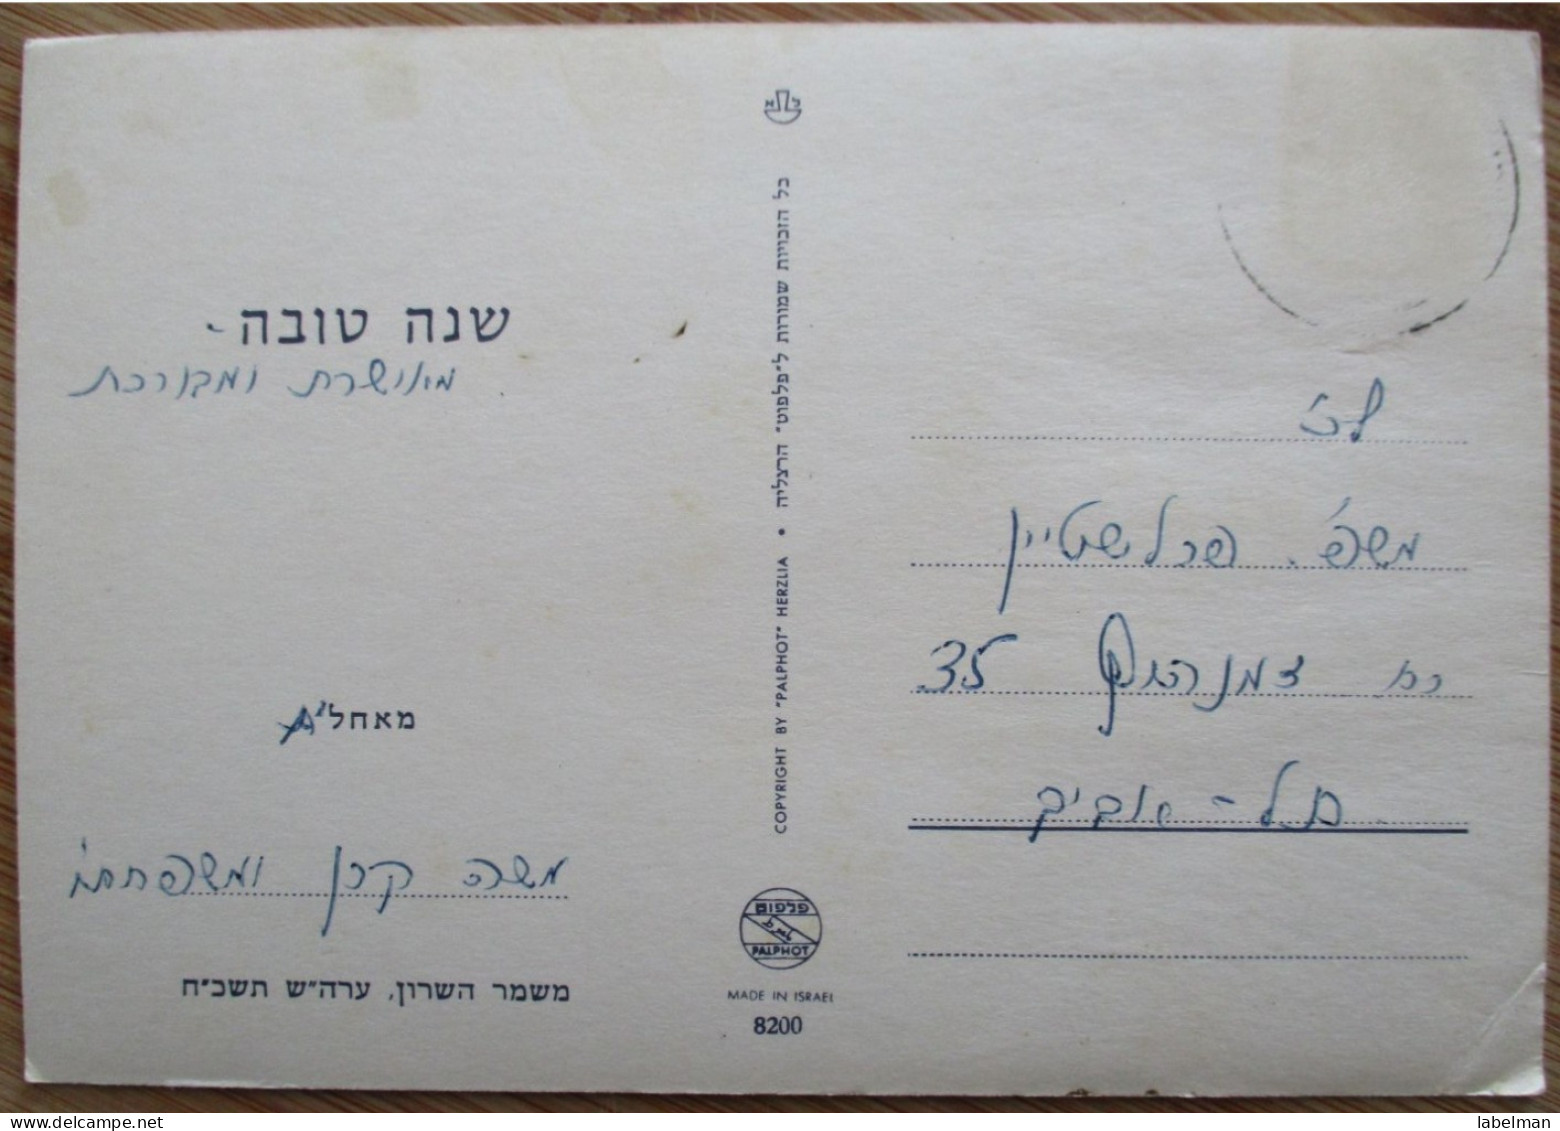 ISRAEL KIBBUTZ MISHMAR HASHARON AK CARD SHANA TOVA NEW YEAR JUDAICA PC CP POSTKARTE CARTE POSTALE POSTCARD ANSICHTSKARTE - Adesivi Di Alberghi